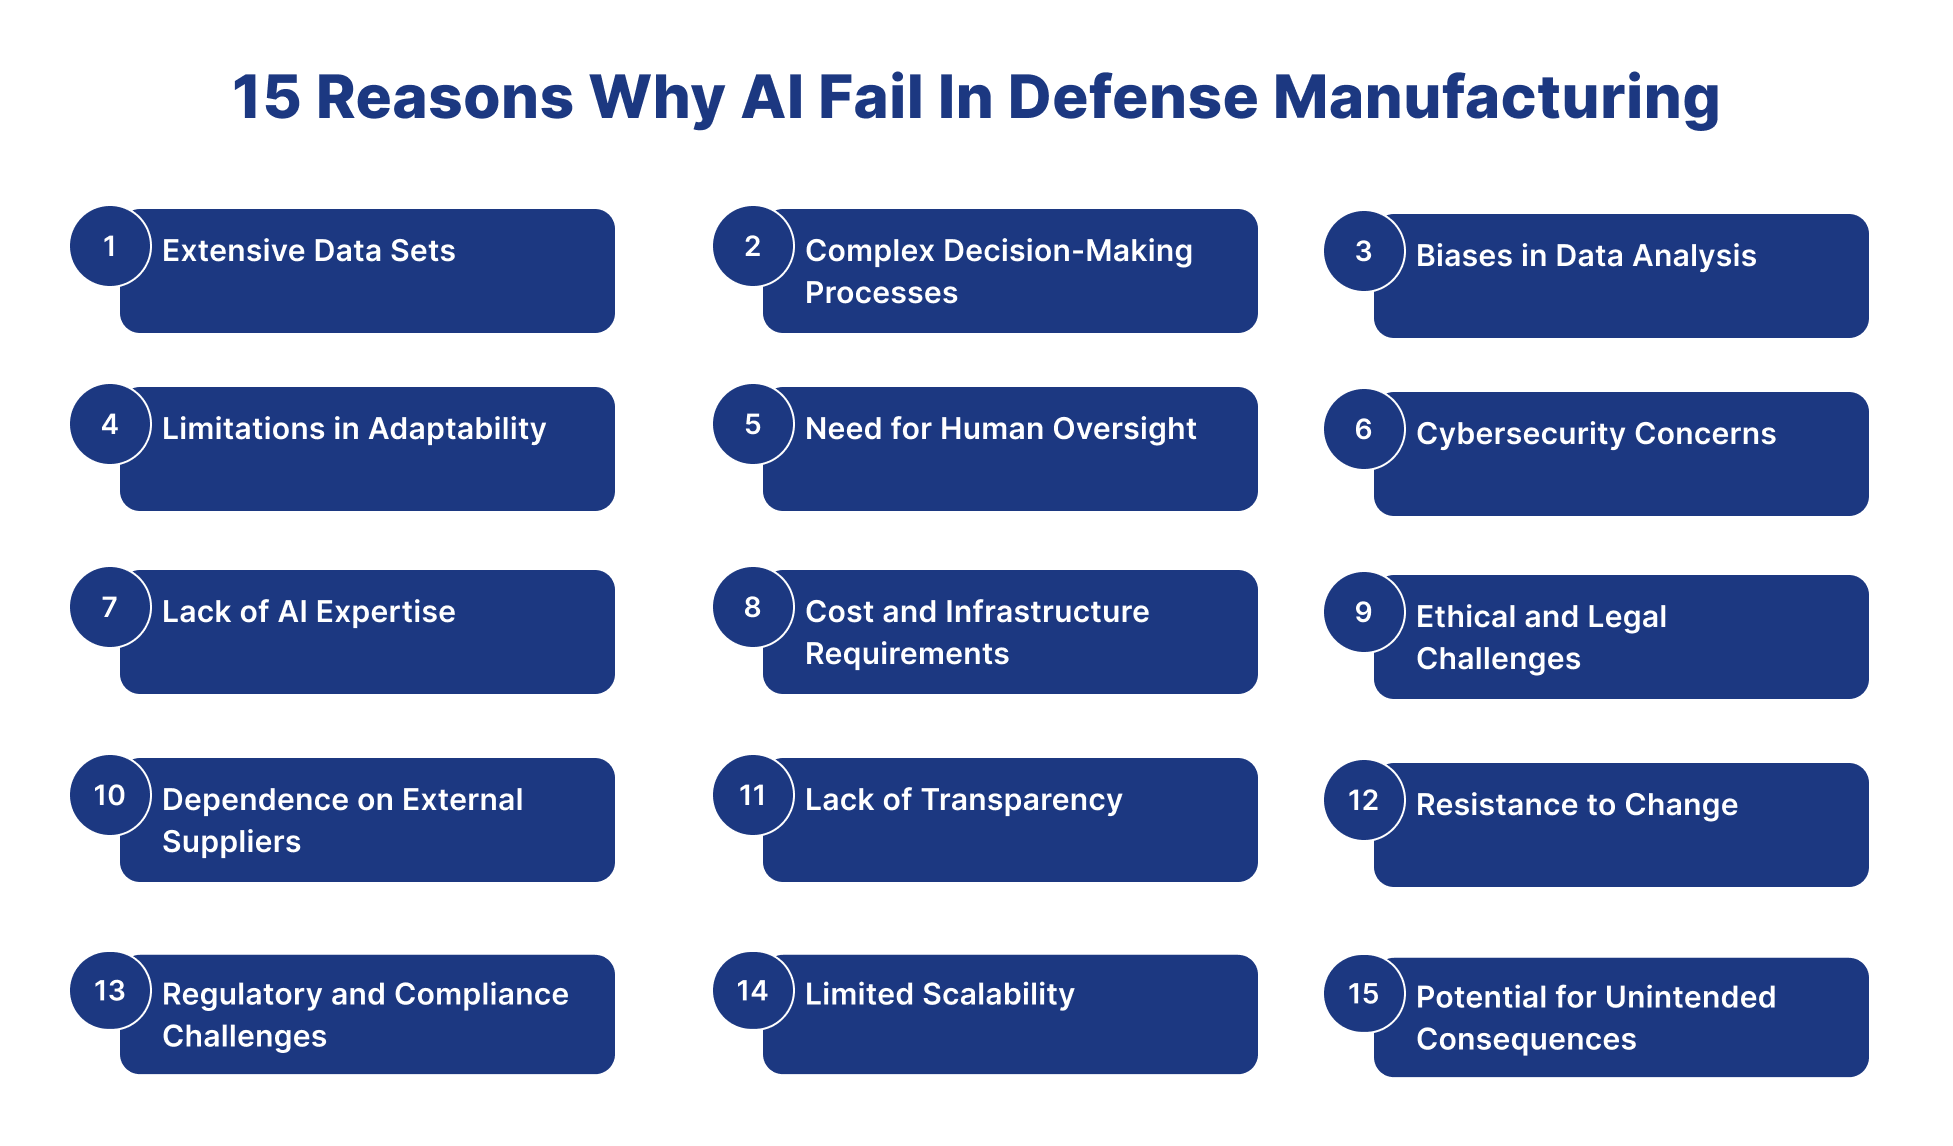 AI fails in defense manufacturing